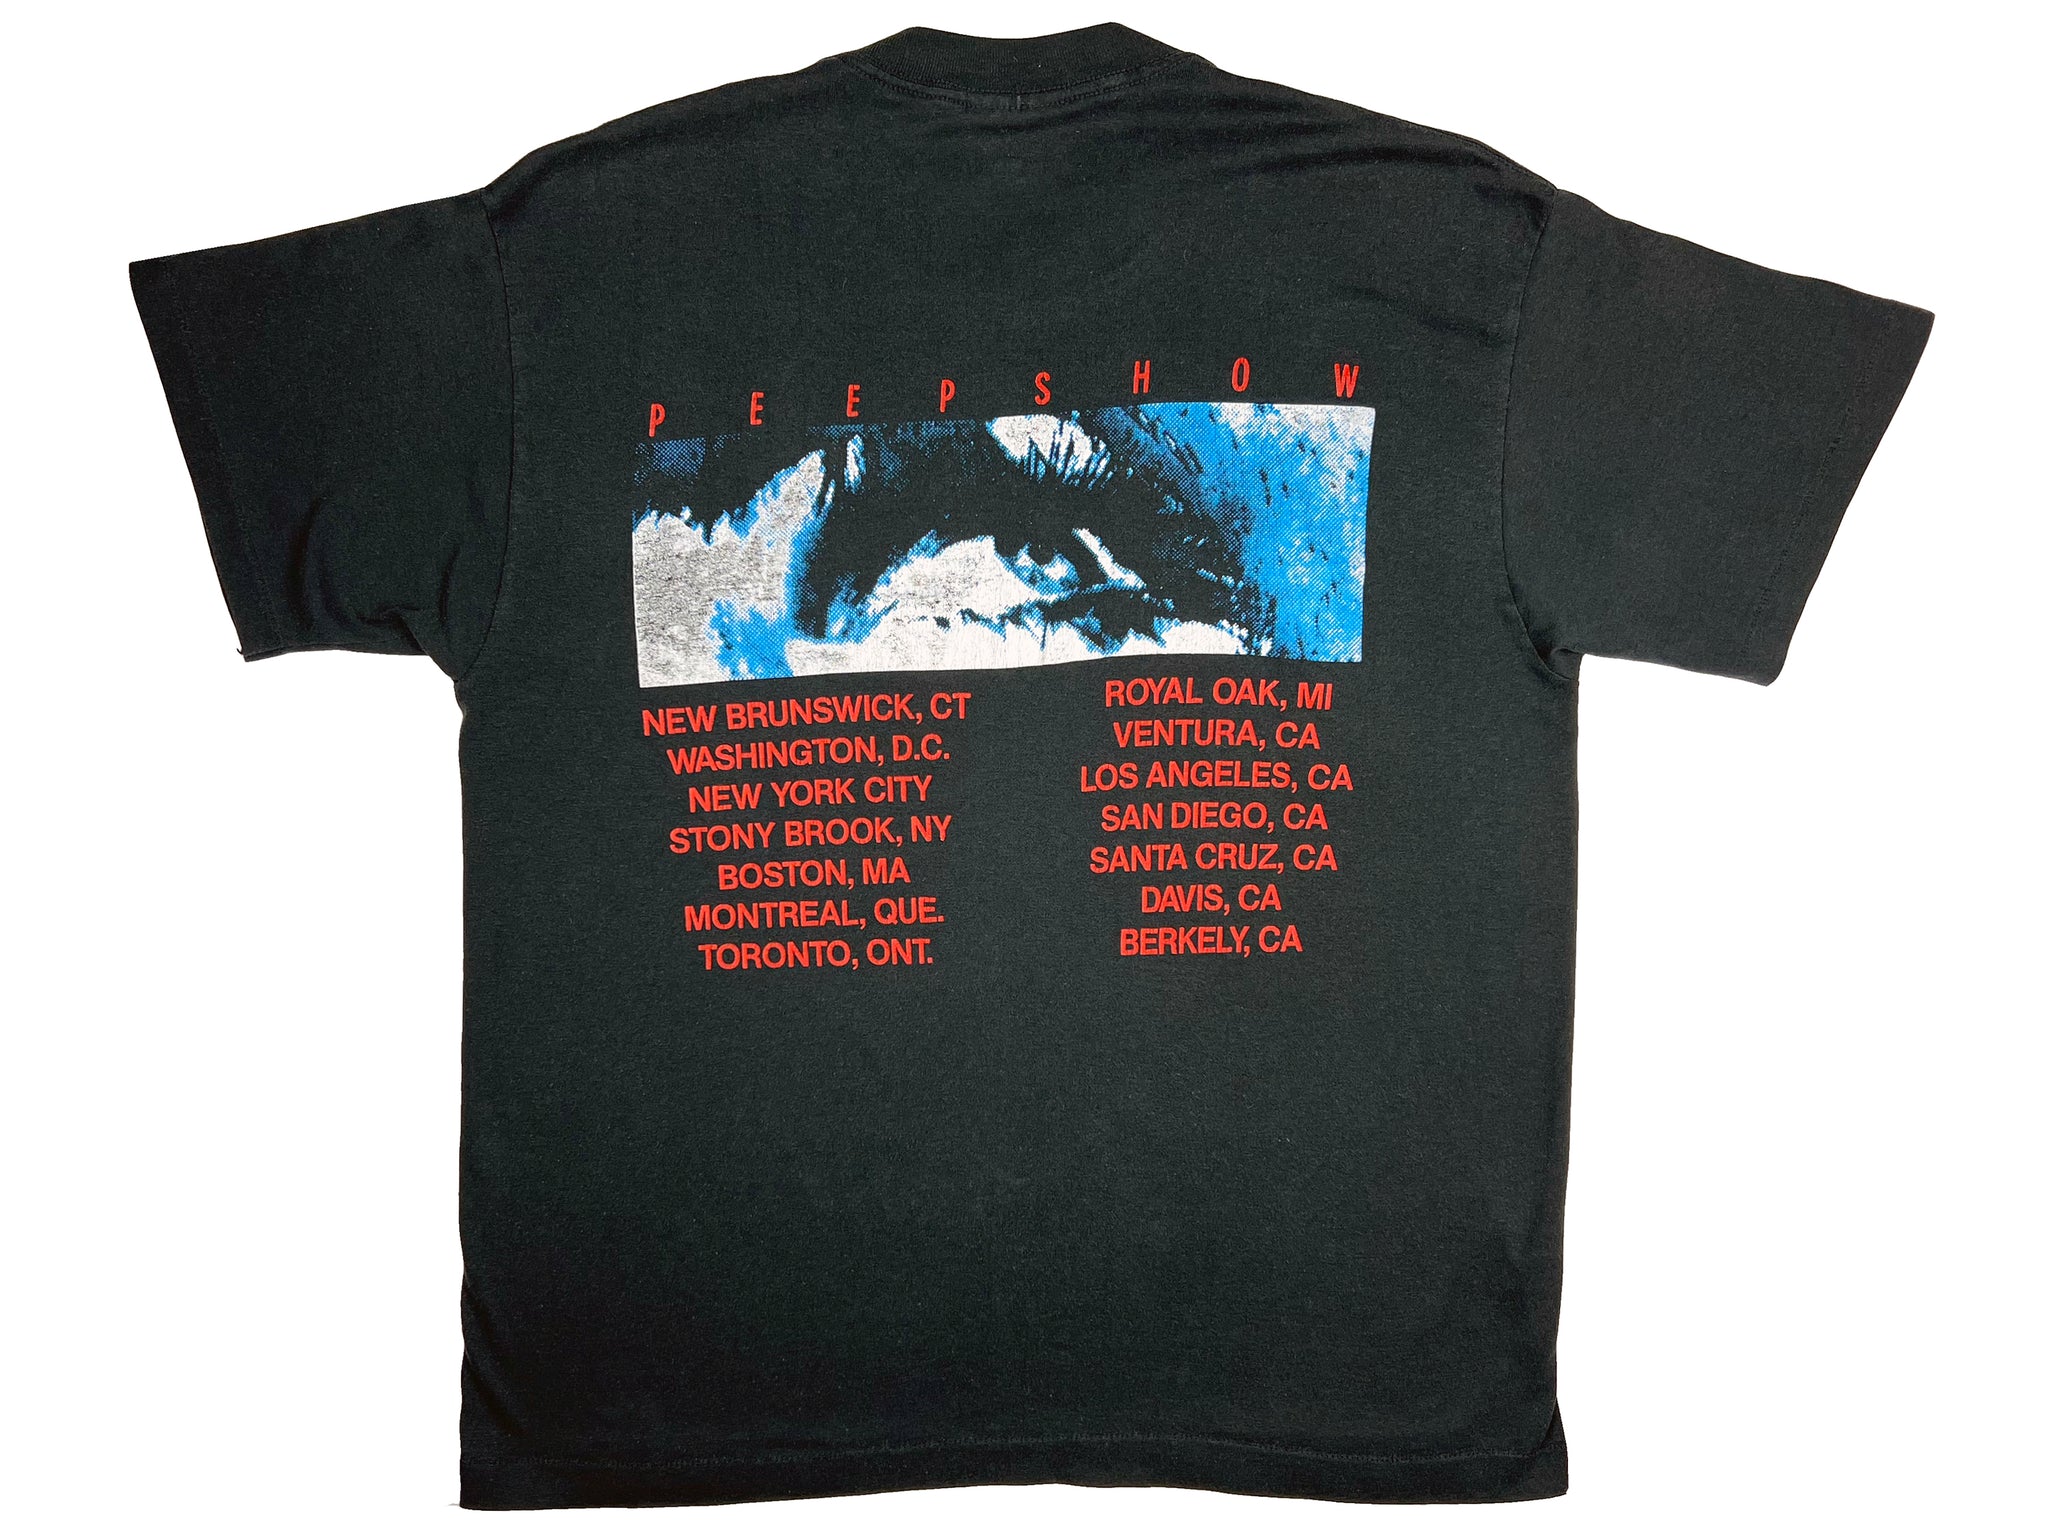 Siouxsie & The Banshees 'Peepshow' Tour T-Shirt